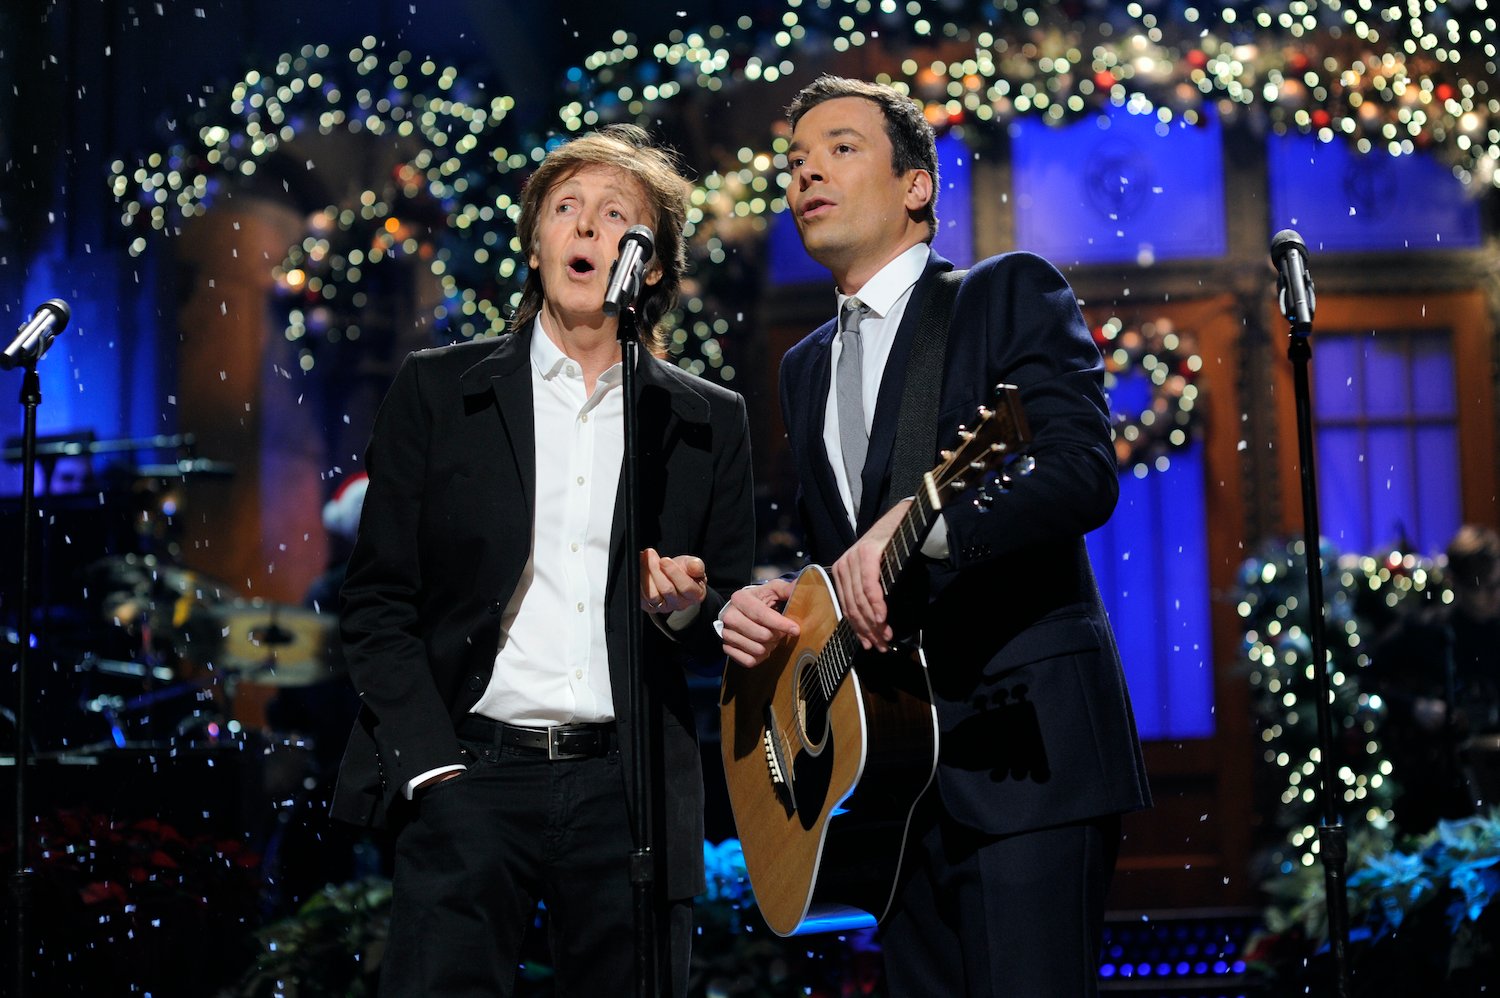 Paul McCartney and Jimmy Fallon perform on Saturday Night Live Season 39